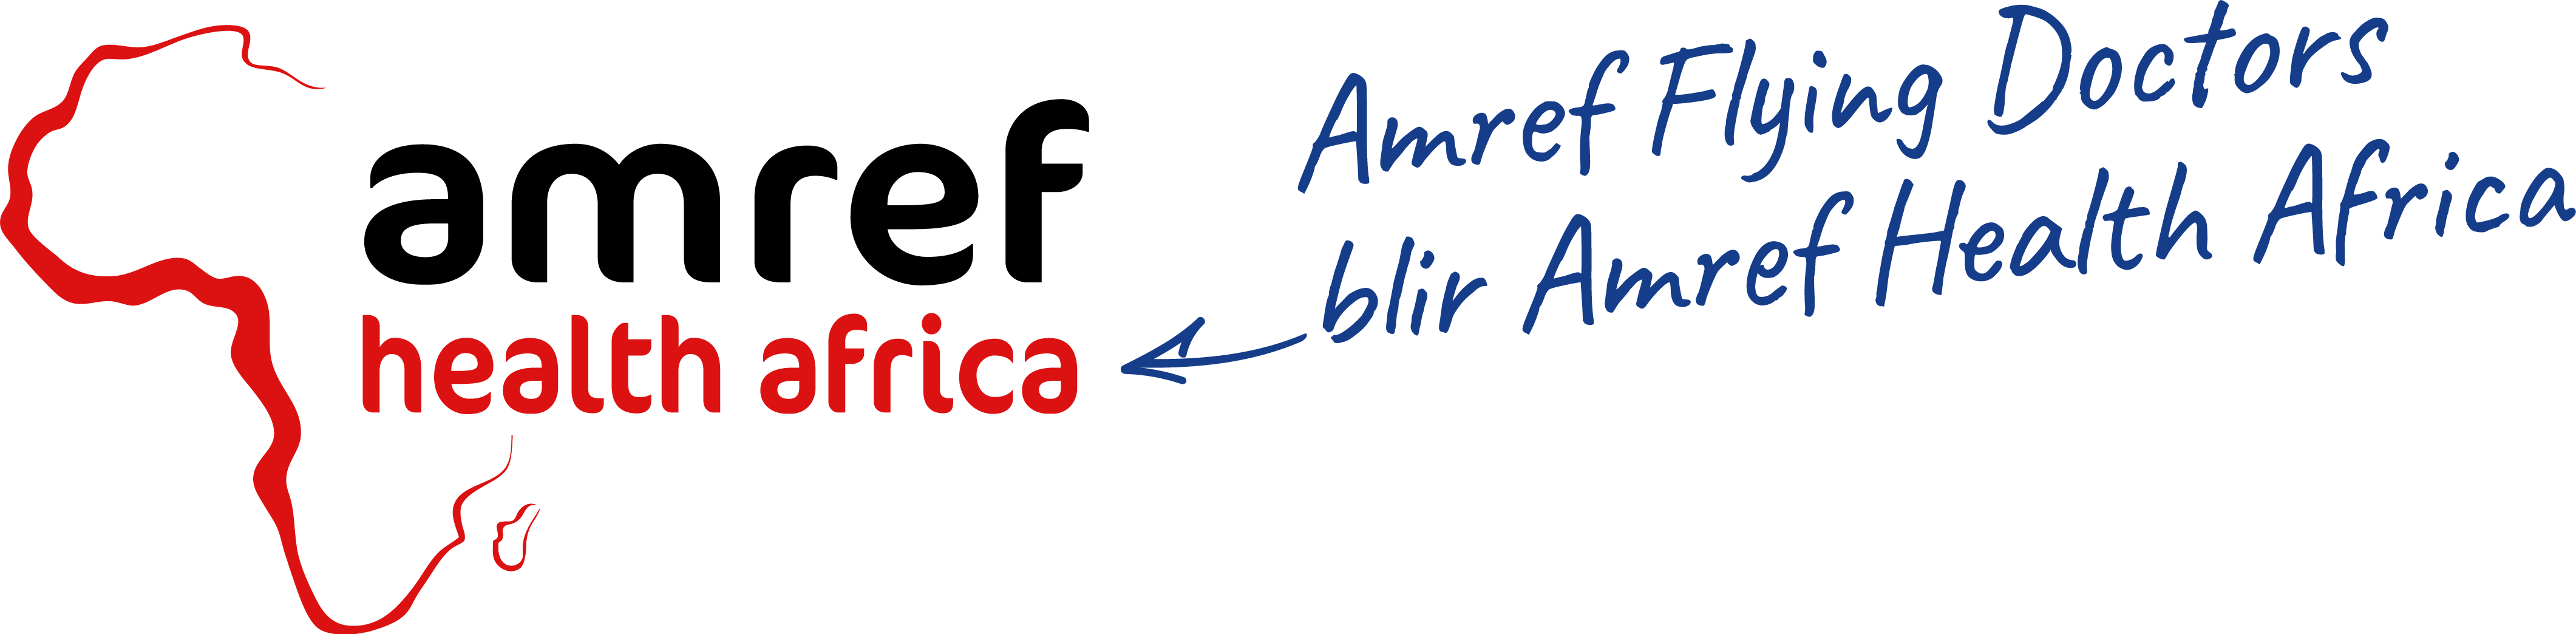 Amref Flying Doctors blir Amref Health Africa